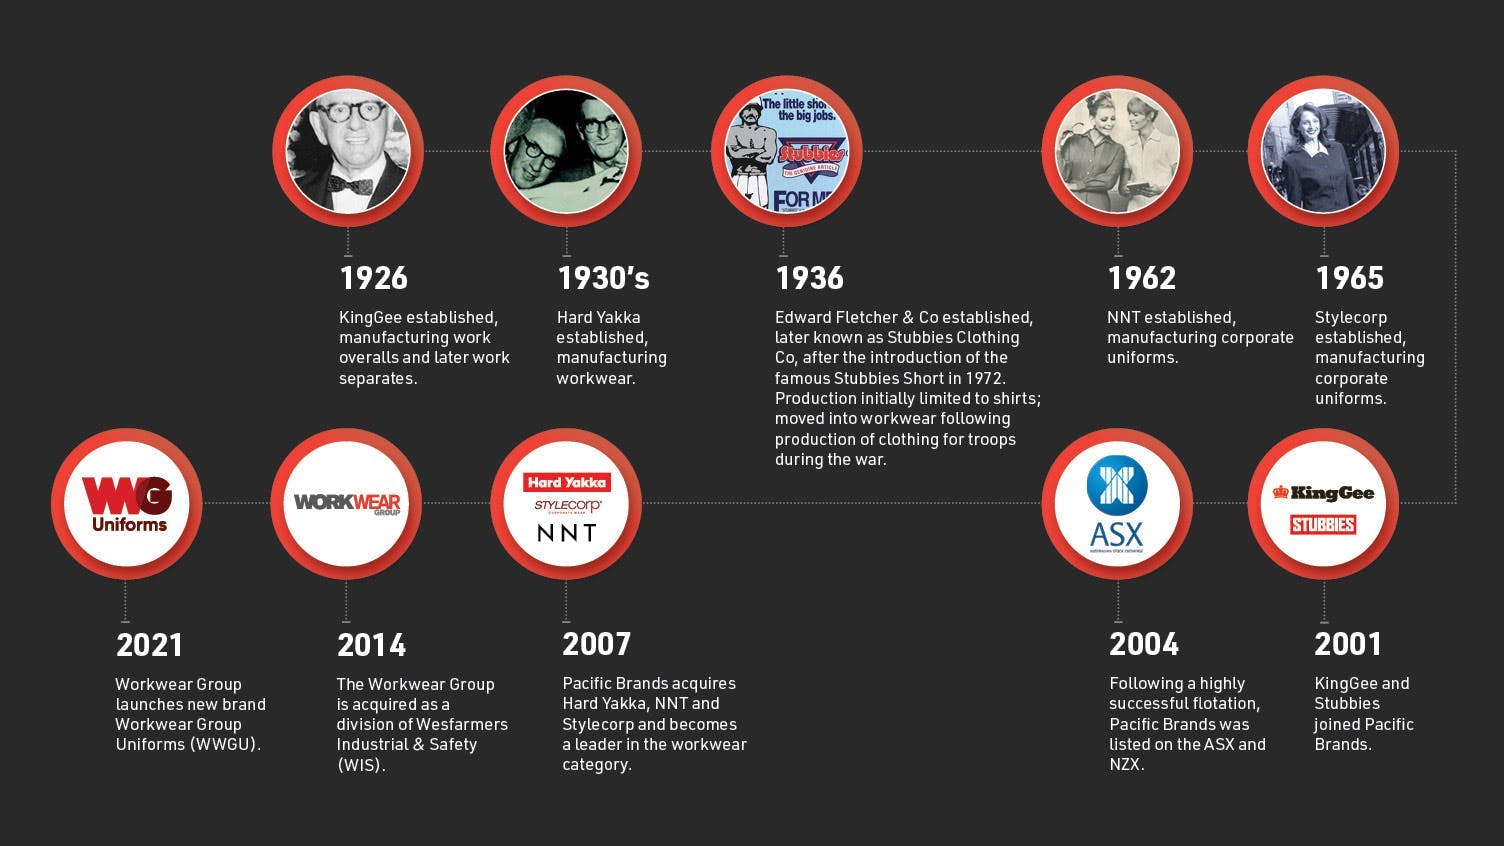 Workwear Group history timeline